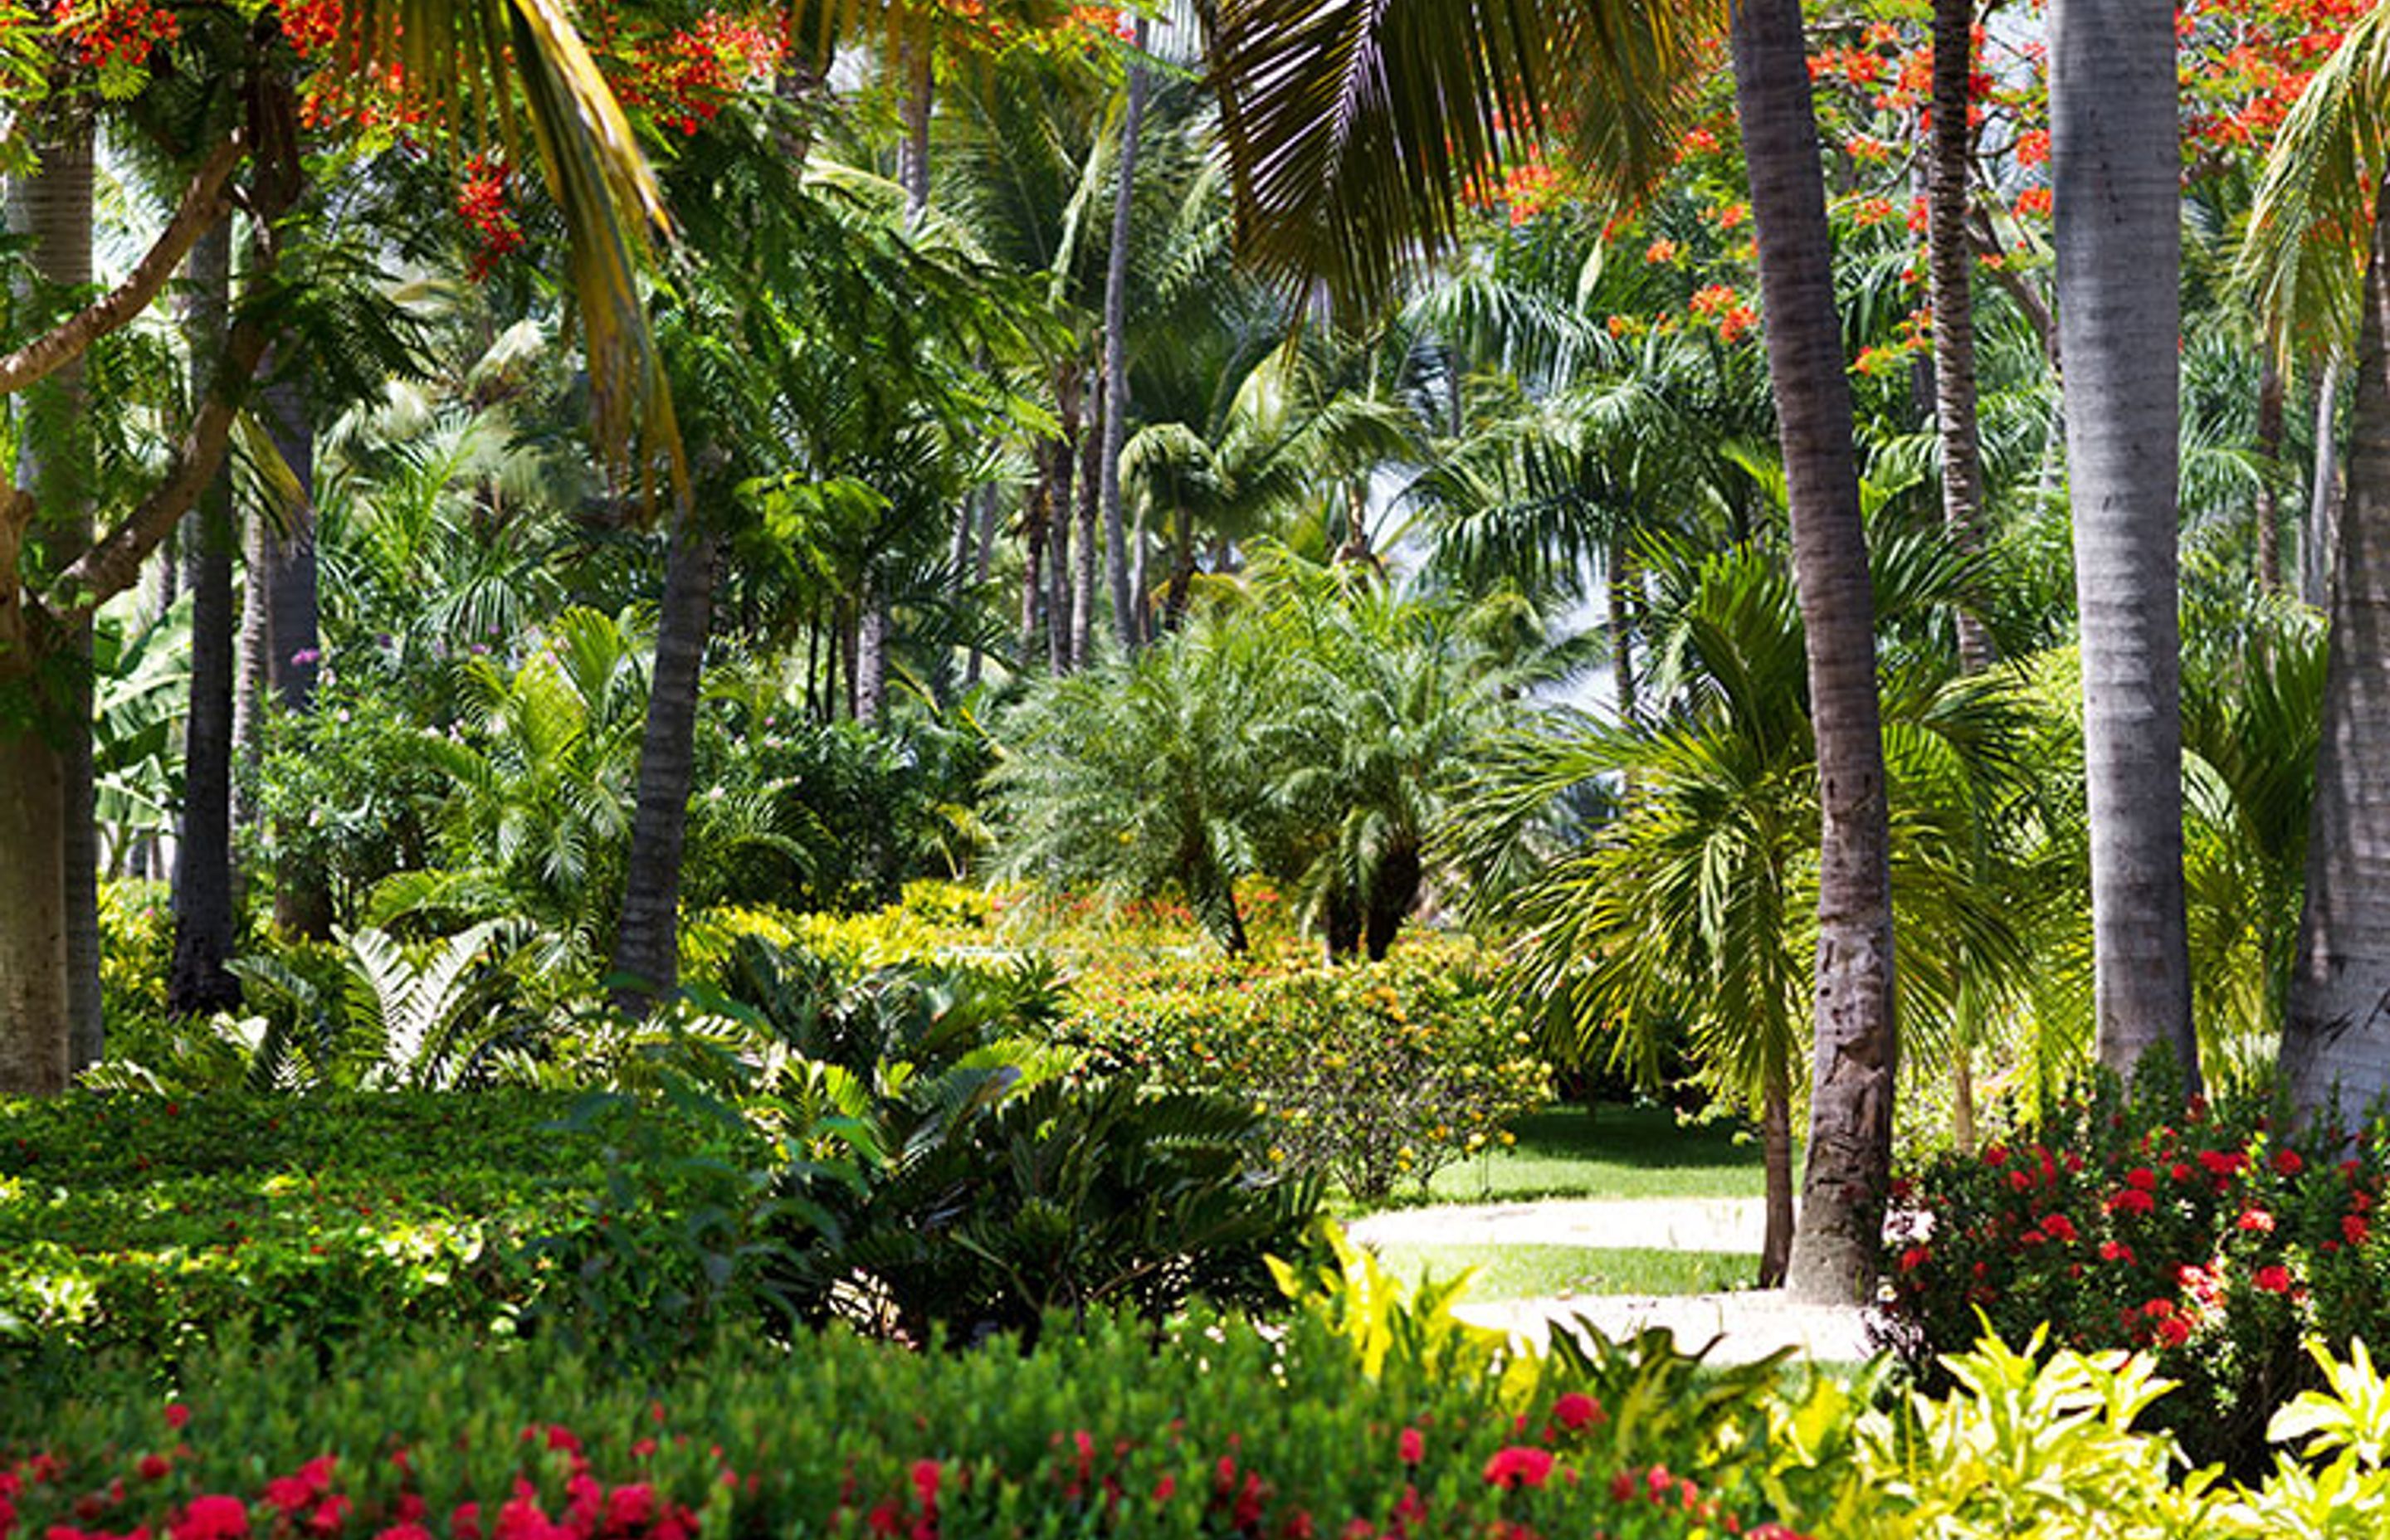 Themed garden series part 2: tropical gardens